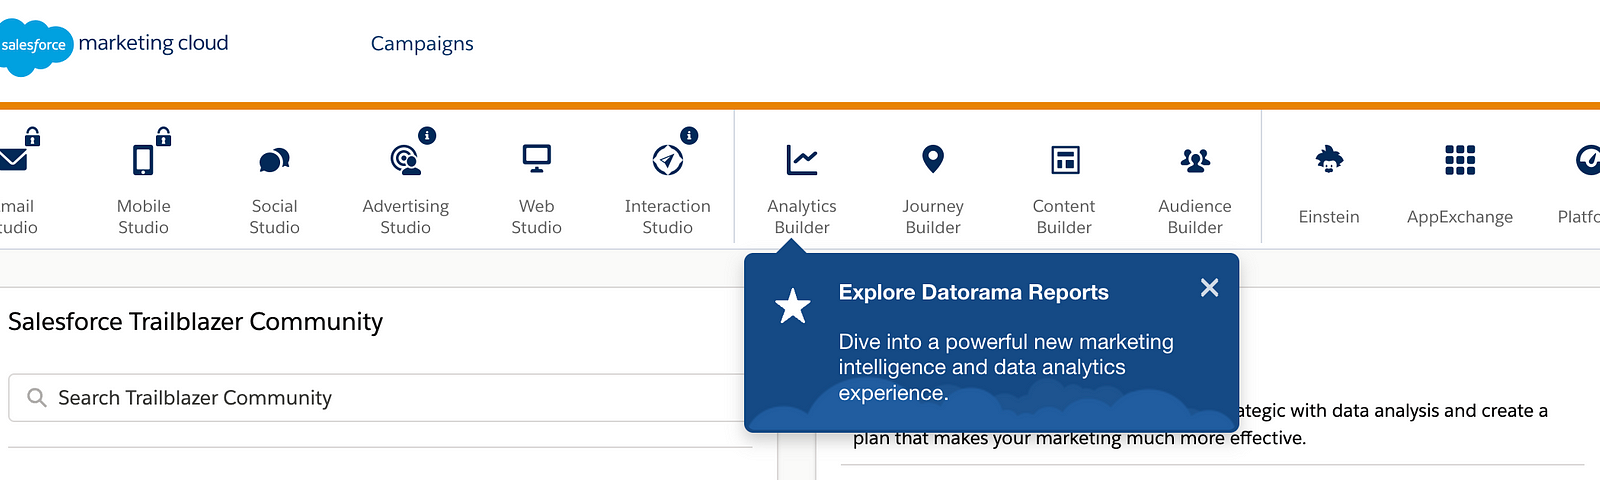 Explore Datorama Reports